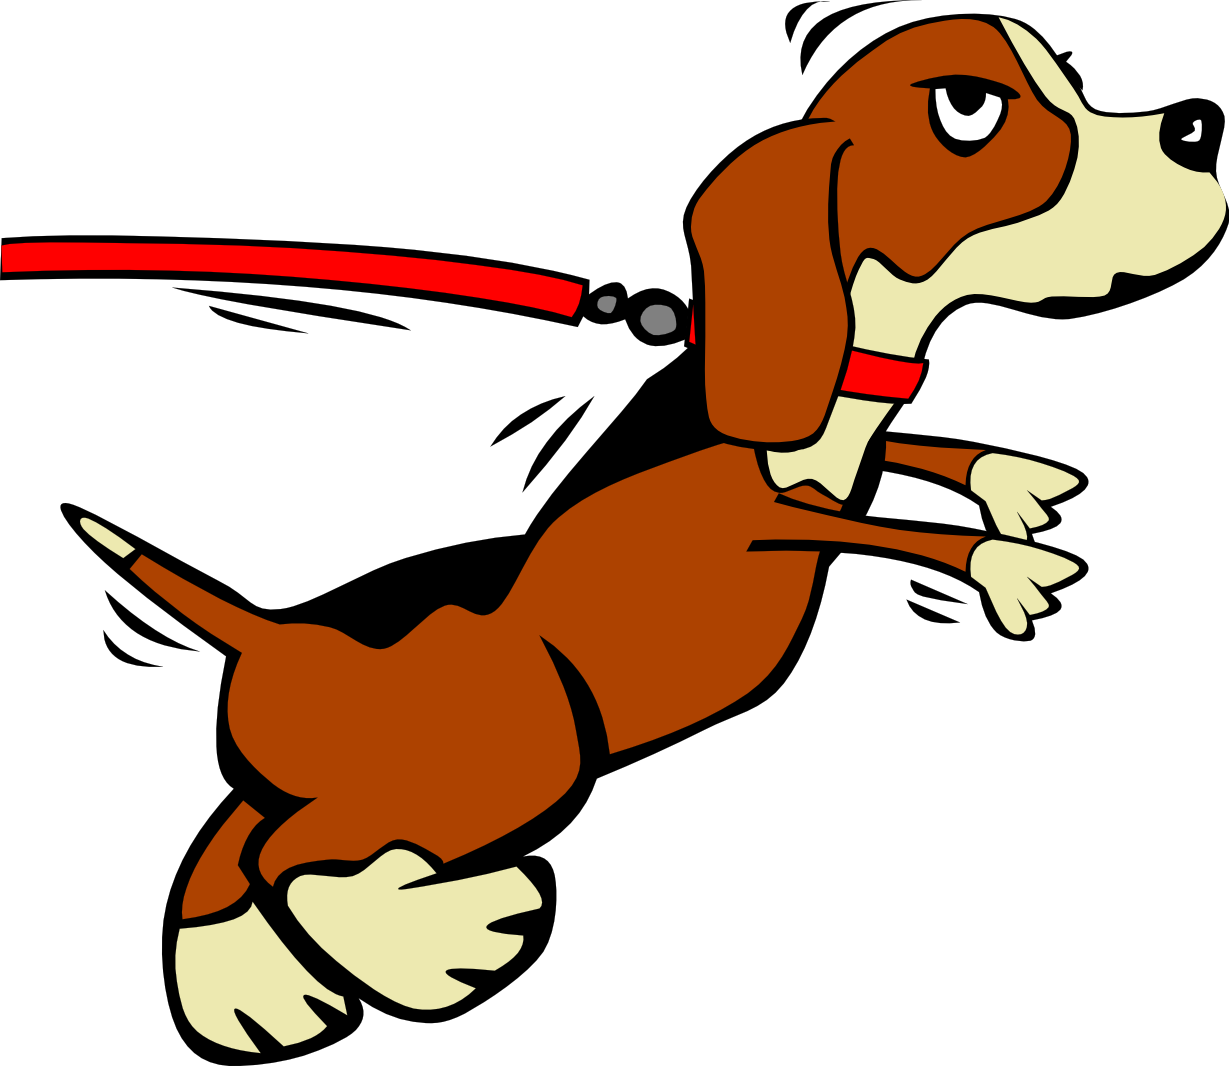 Beagle clipart transparent background. Free angry dog cartoon